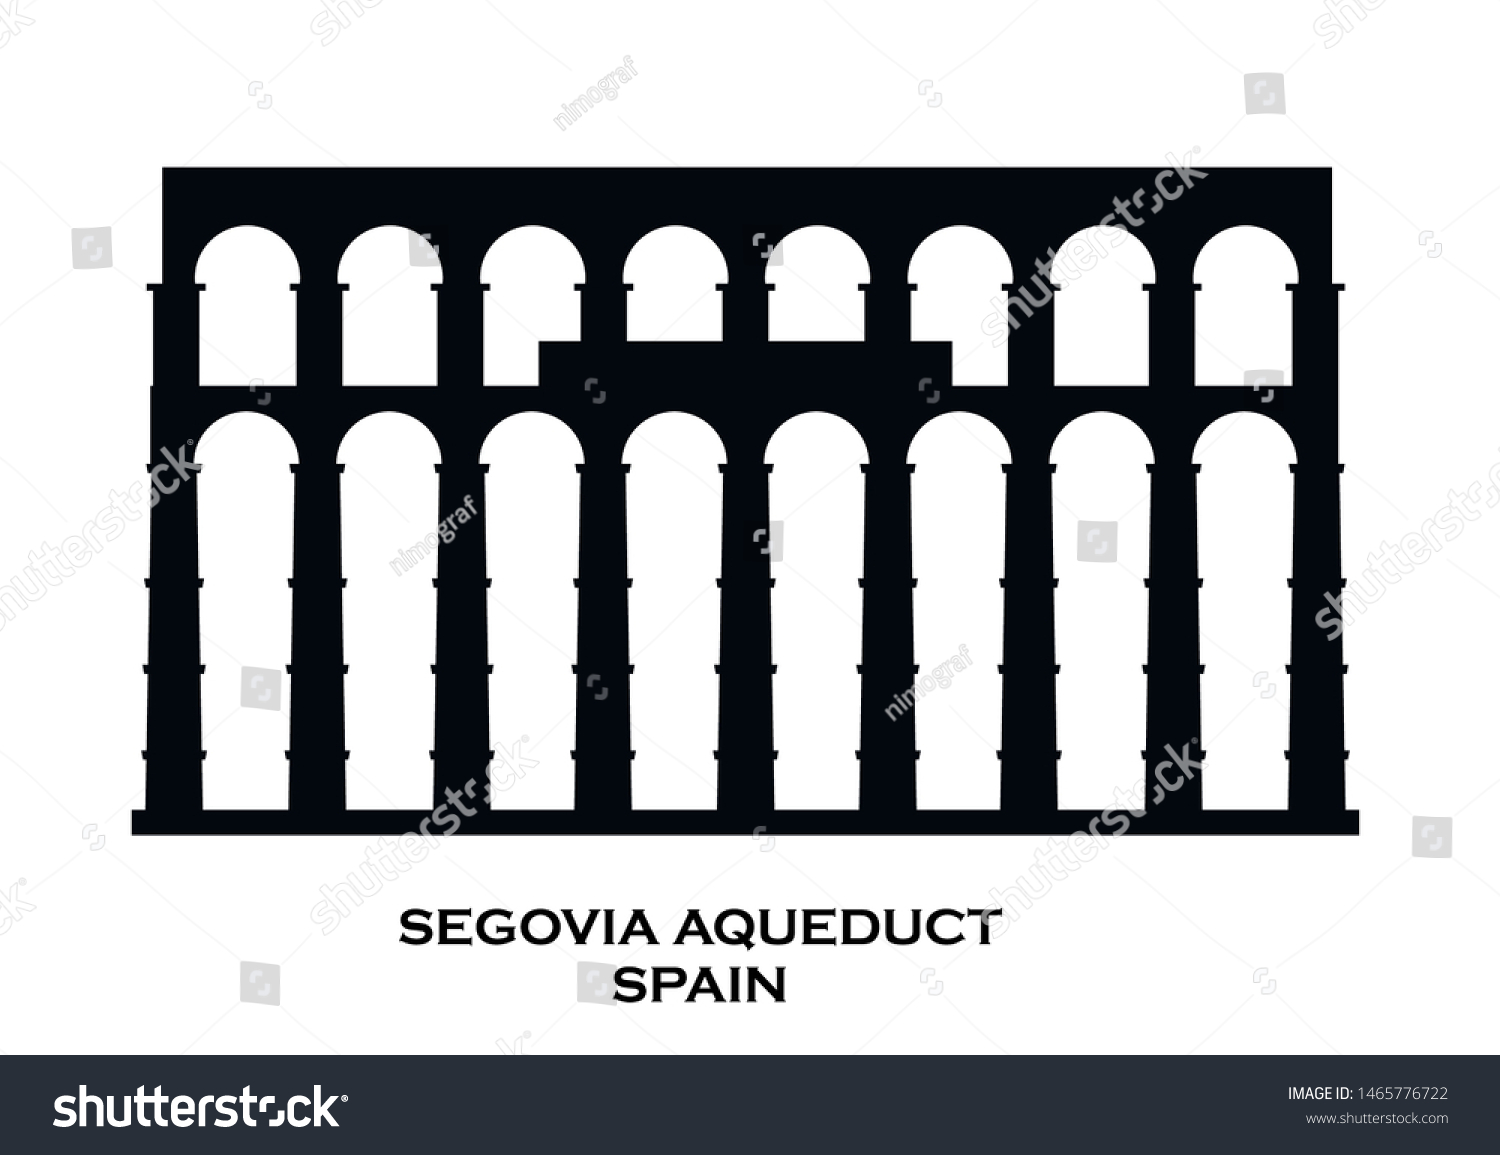 SVG of Aqueduct of Segovia, Spain vector icon.  Roman Aqueduct  vector building. National symbol of Spain. Illustration EPS.  svg